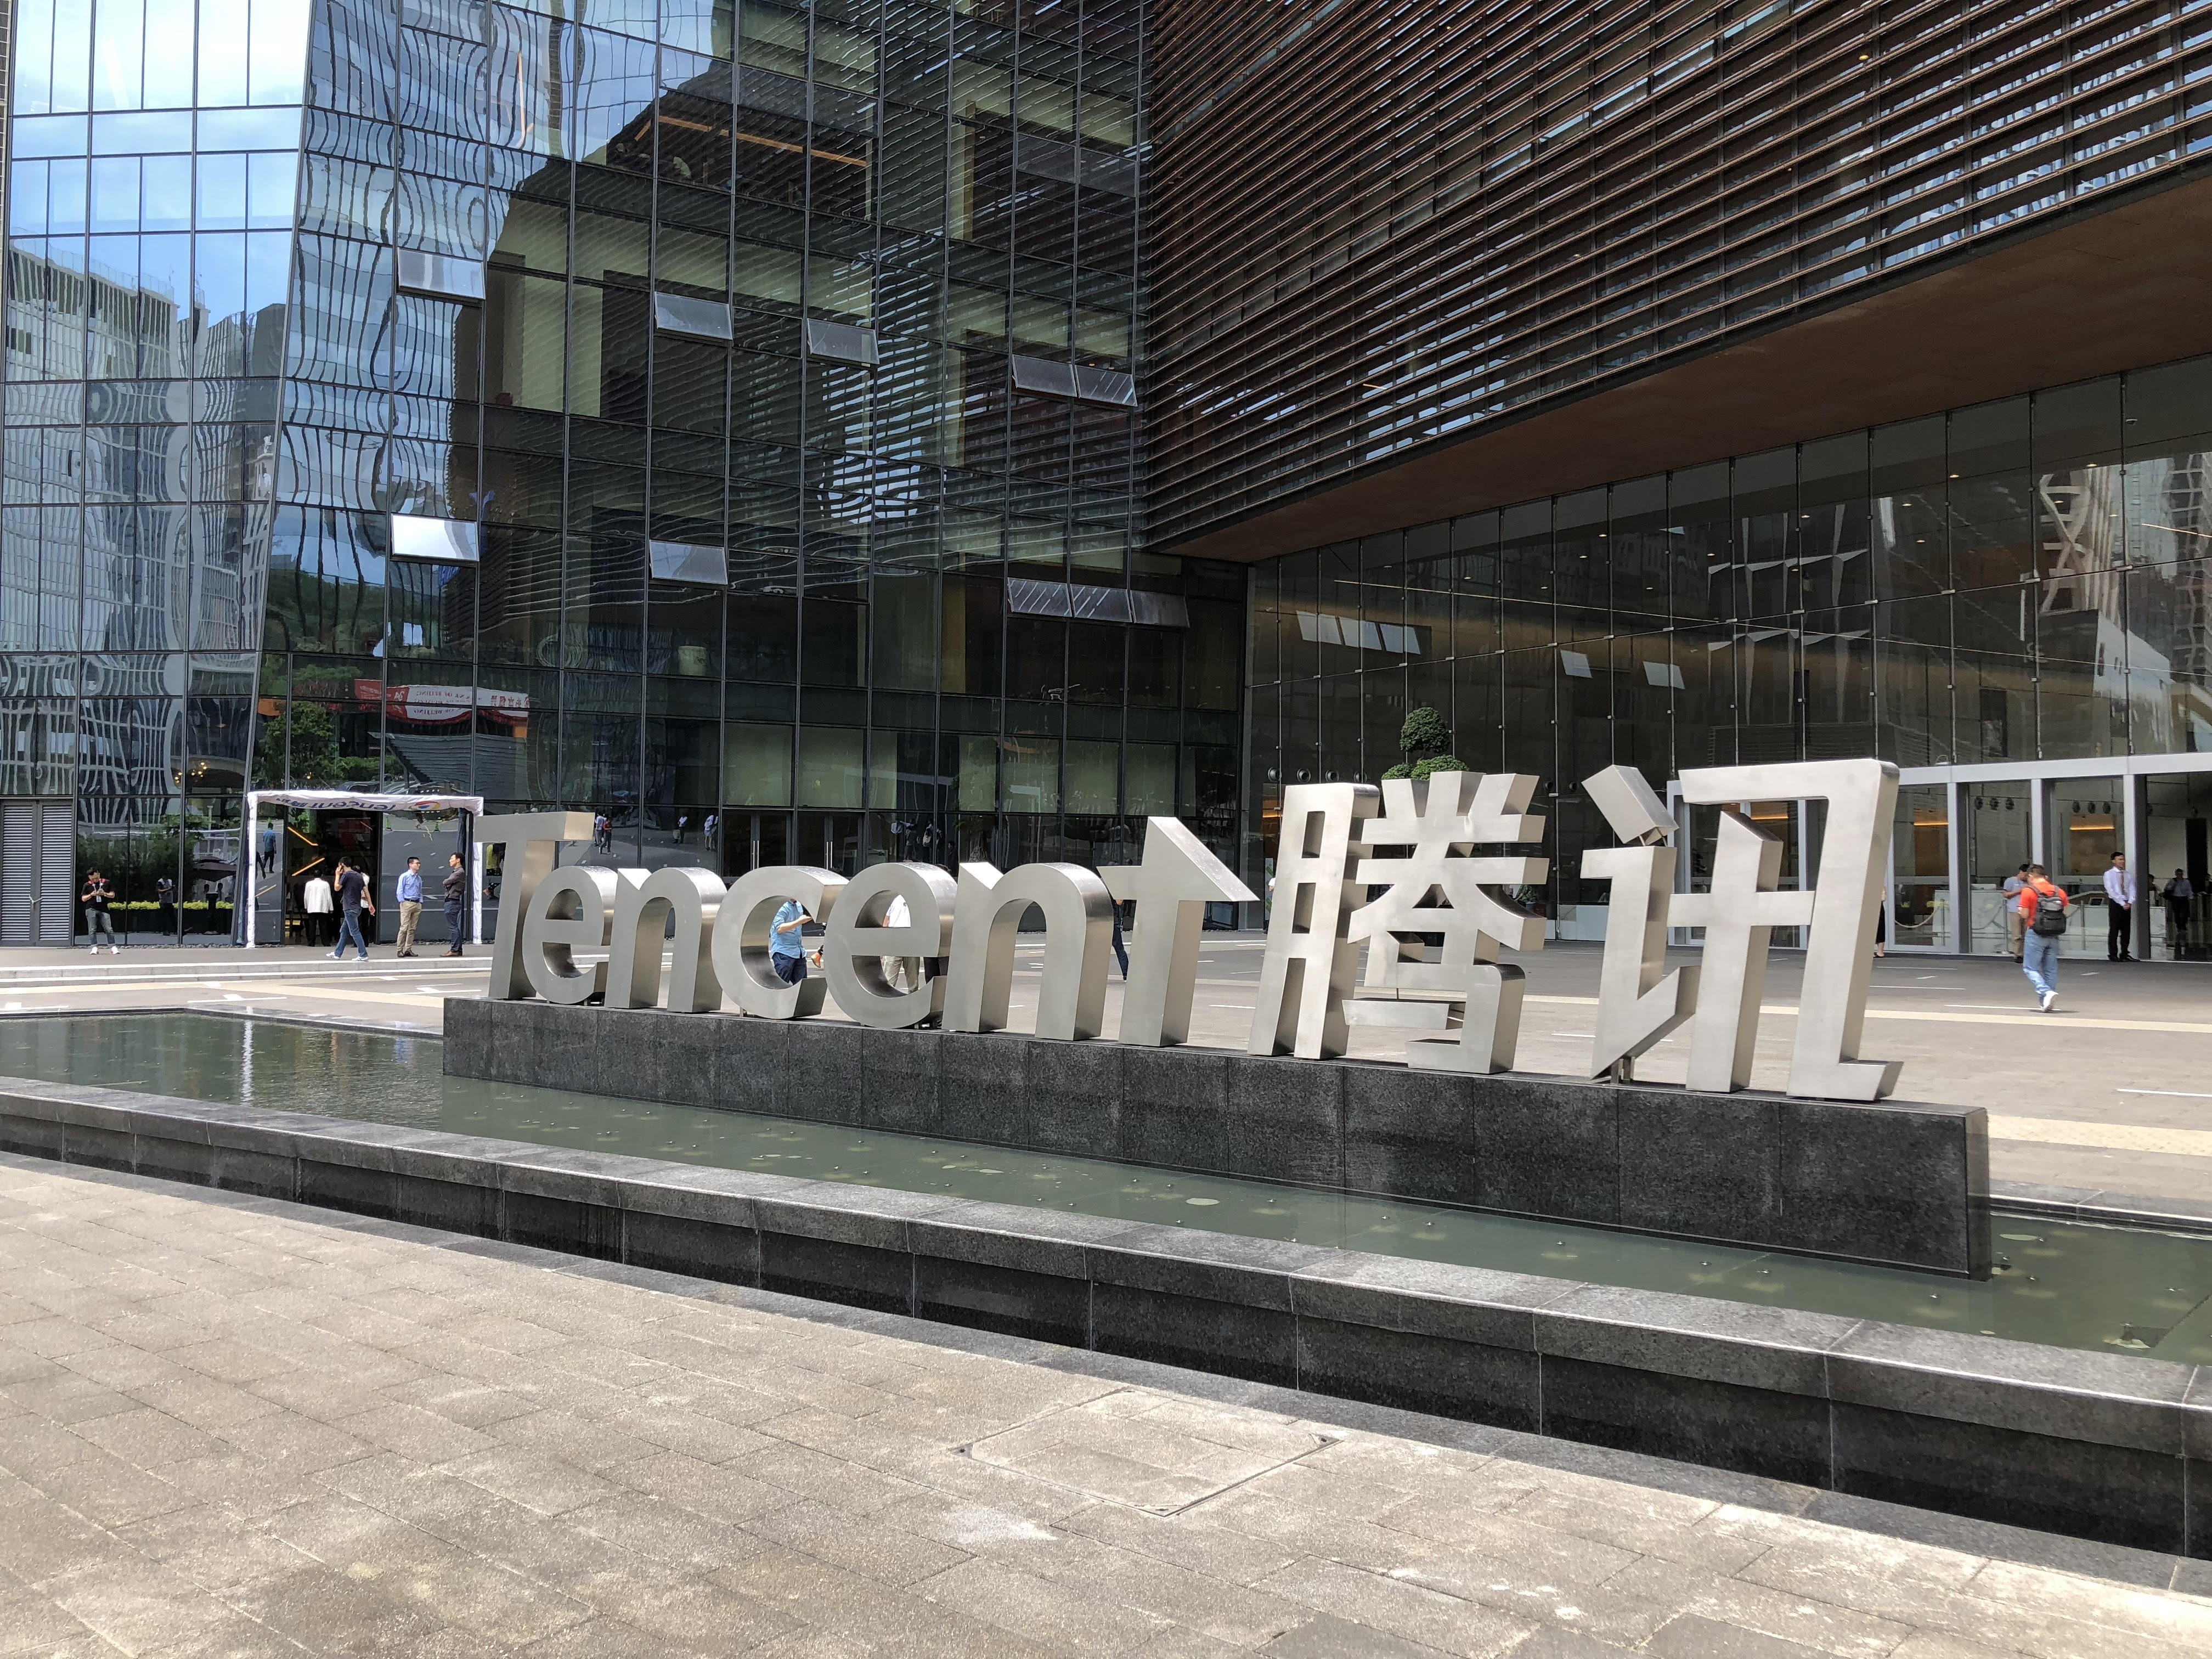 Tencent Holdings’ shares have jumped alongside a rising market. Photo: Chua Kong Ho